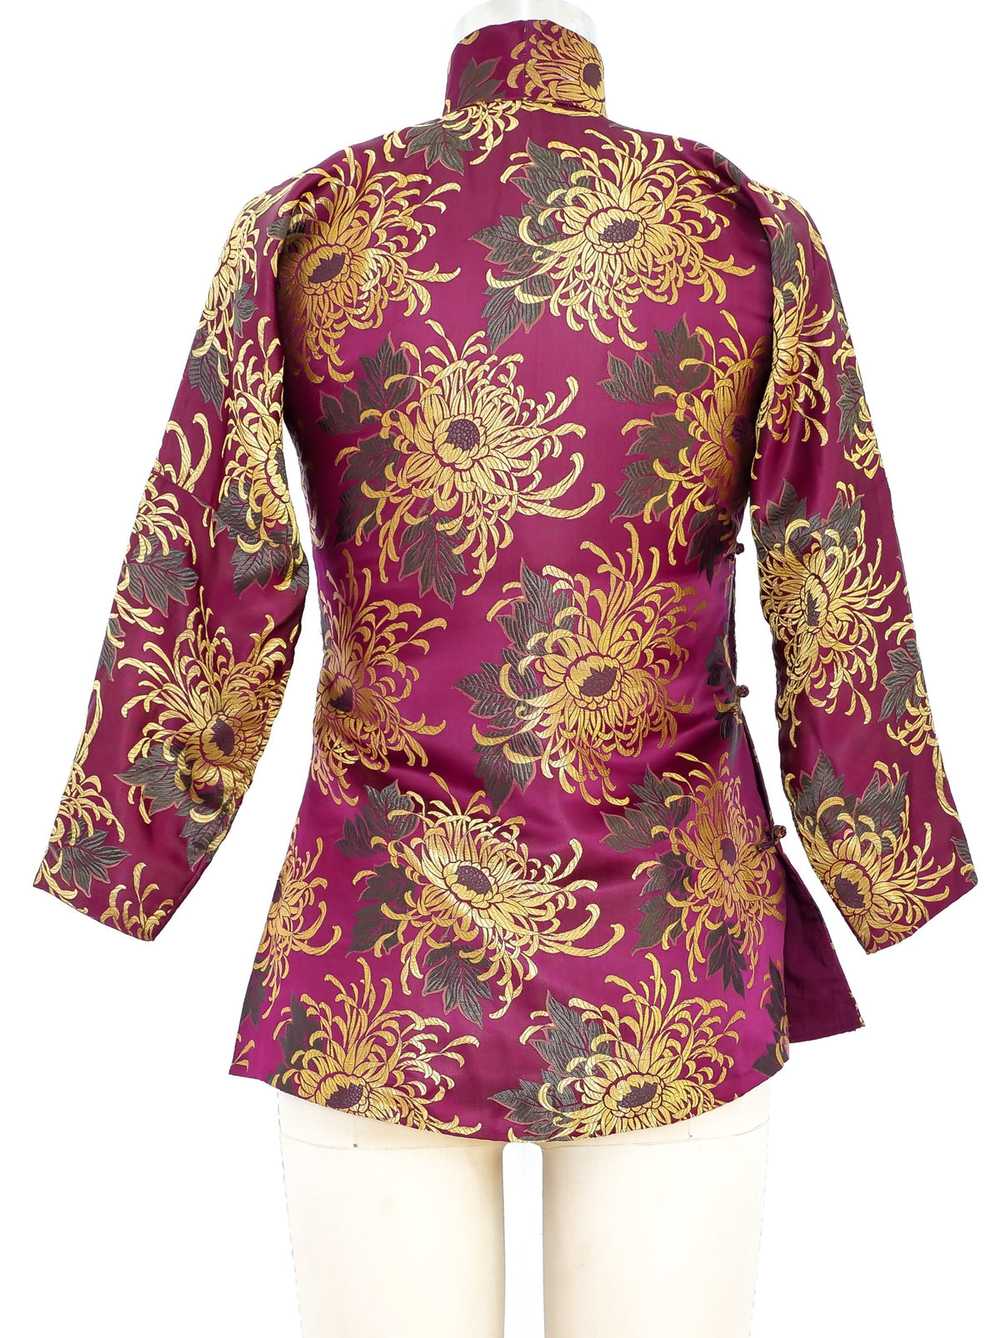 Floral Brocade Silk Xi Pao Jacket - image 5